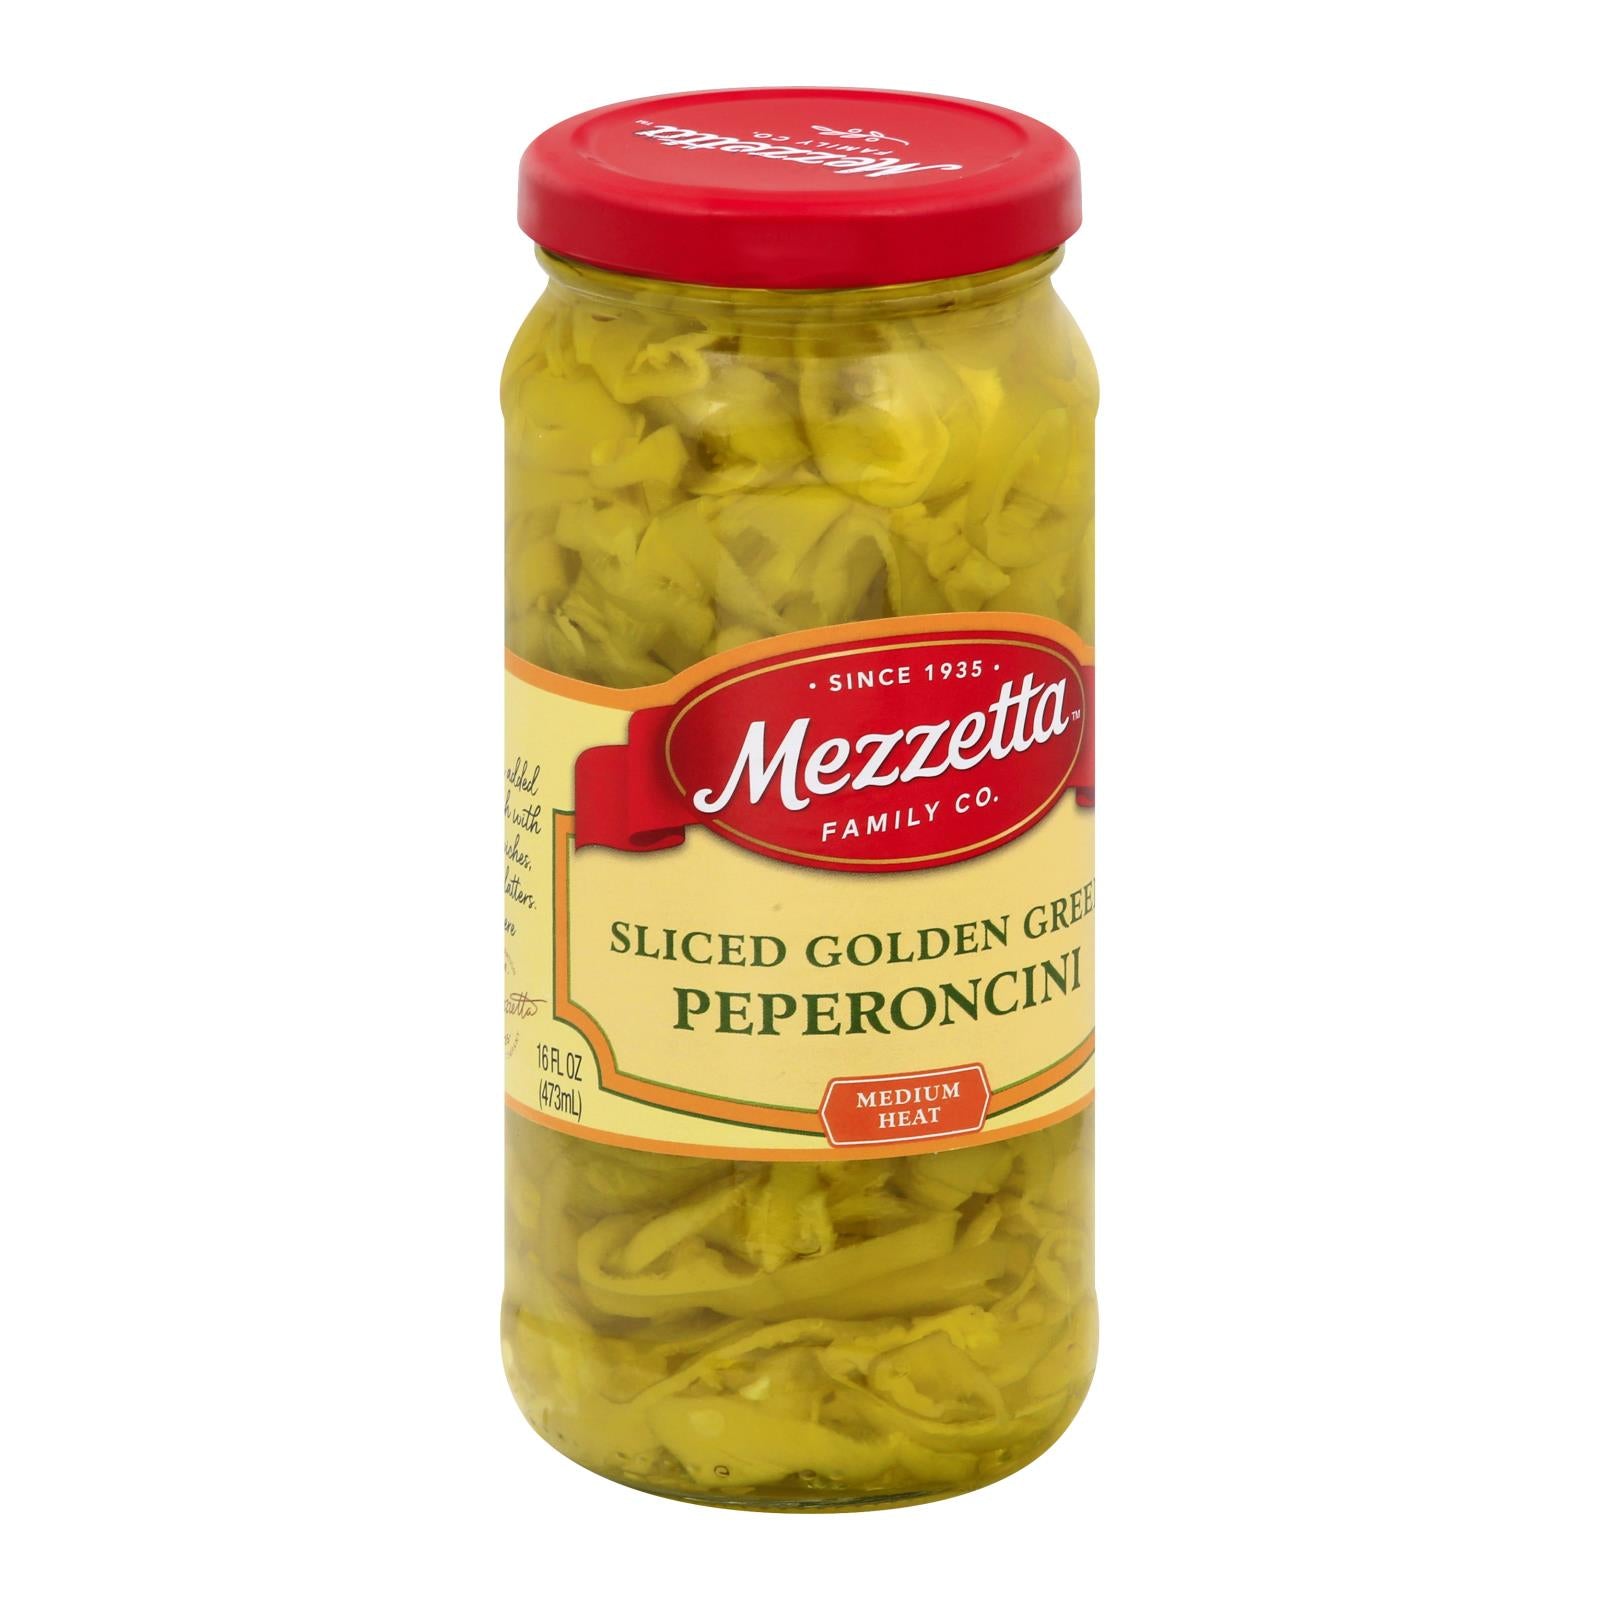 Mezzetta Deli Sliced Golden Greek Pepperoncini - Case Of 6 - 16 Fl Oz.